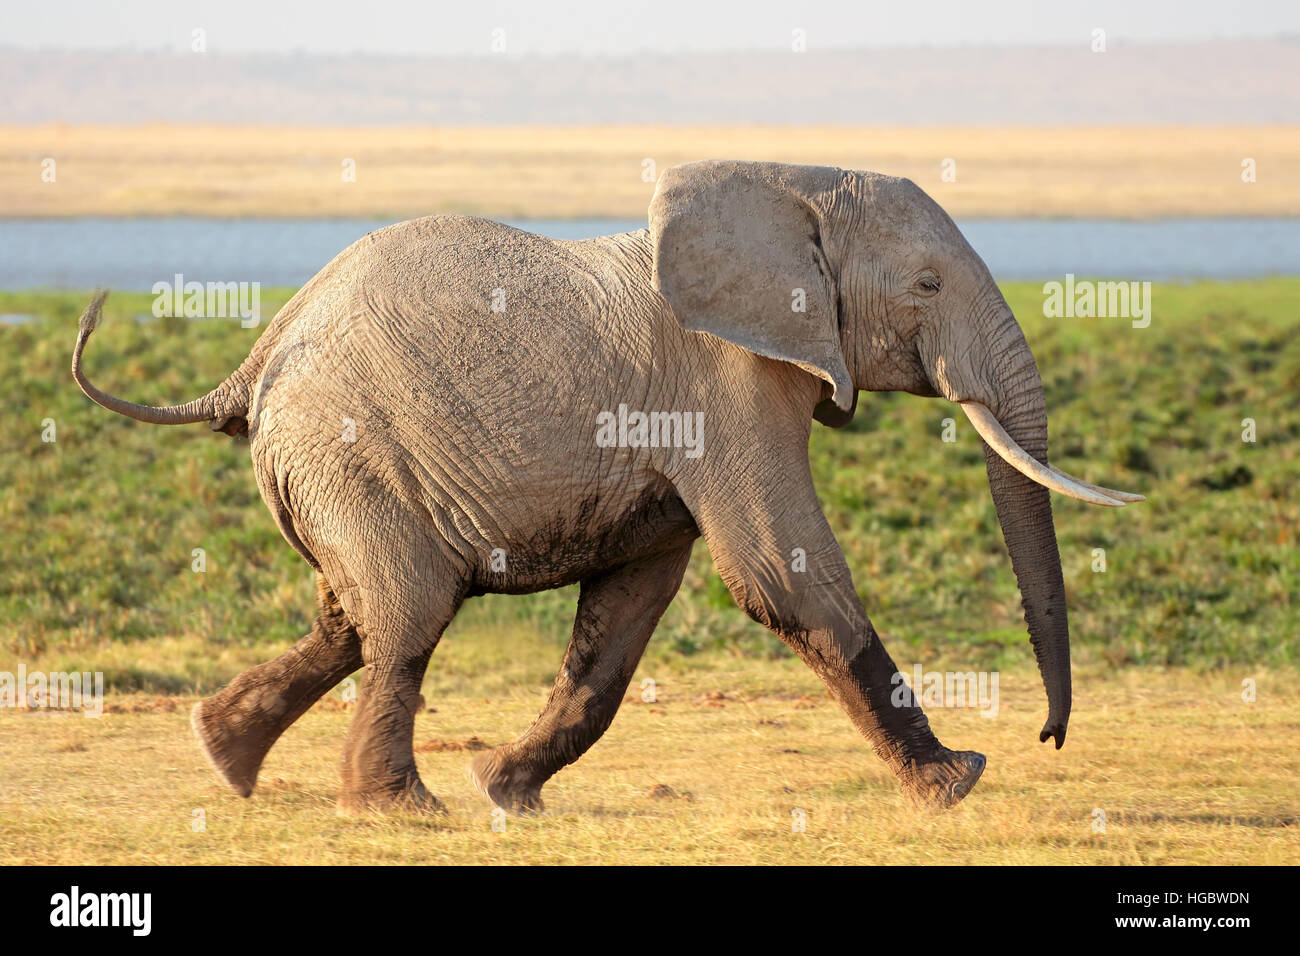 En Afrique bull elephant (Loxodonta africana), le Parc national Amboseli, Kenya Banque D'Images